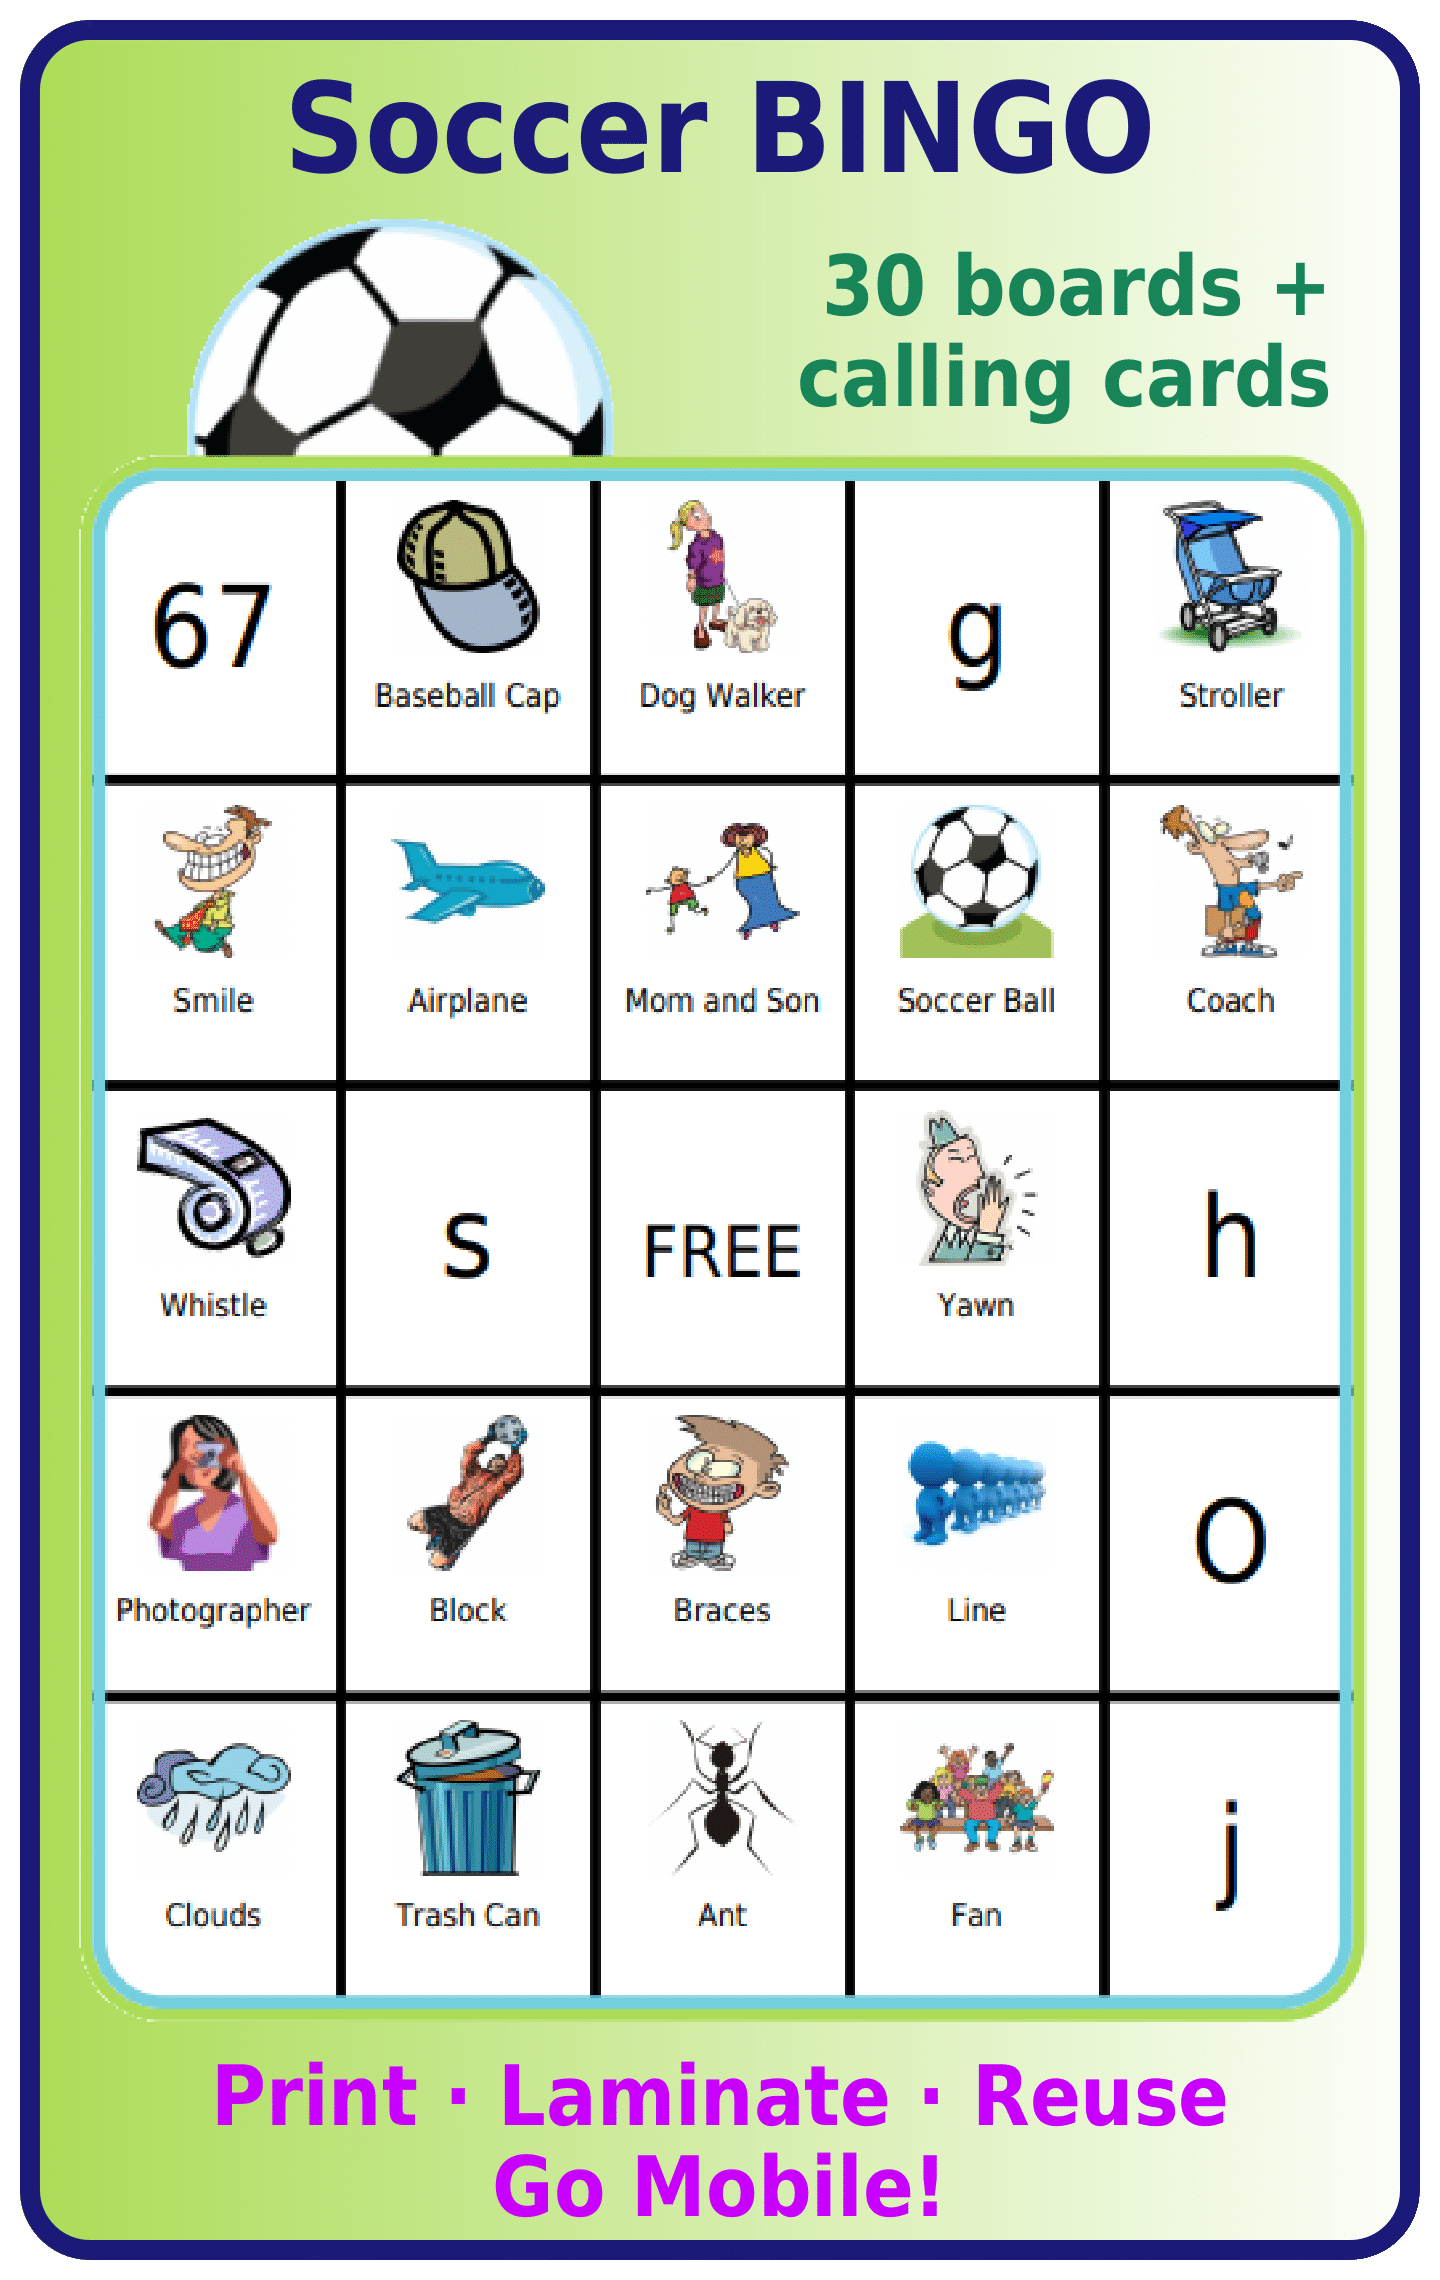 Soccer-themed bingo board, 30 boards + calling cards